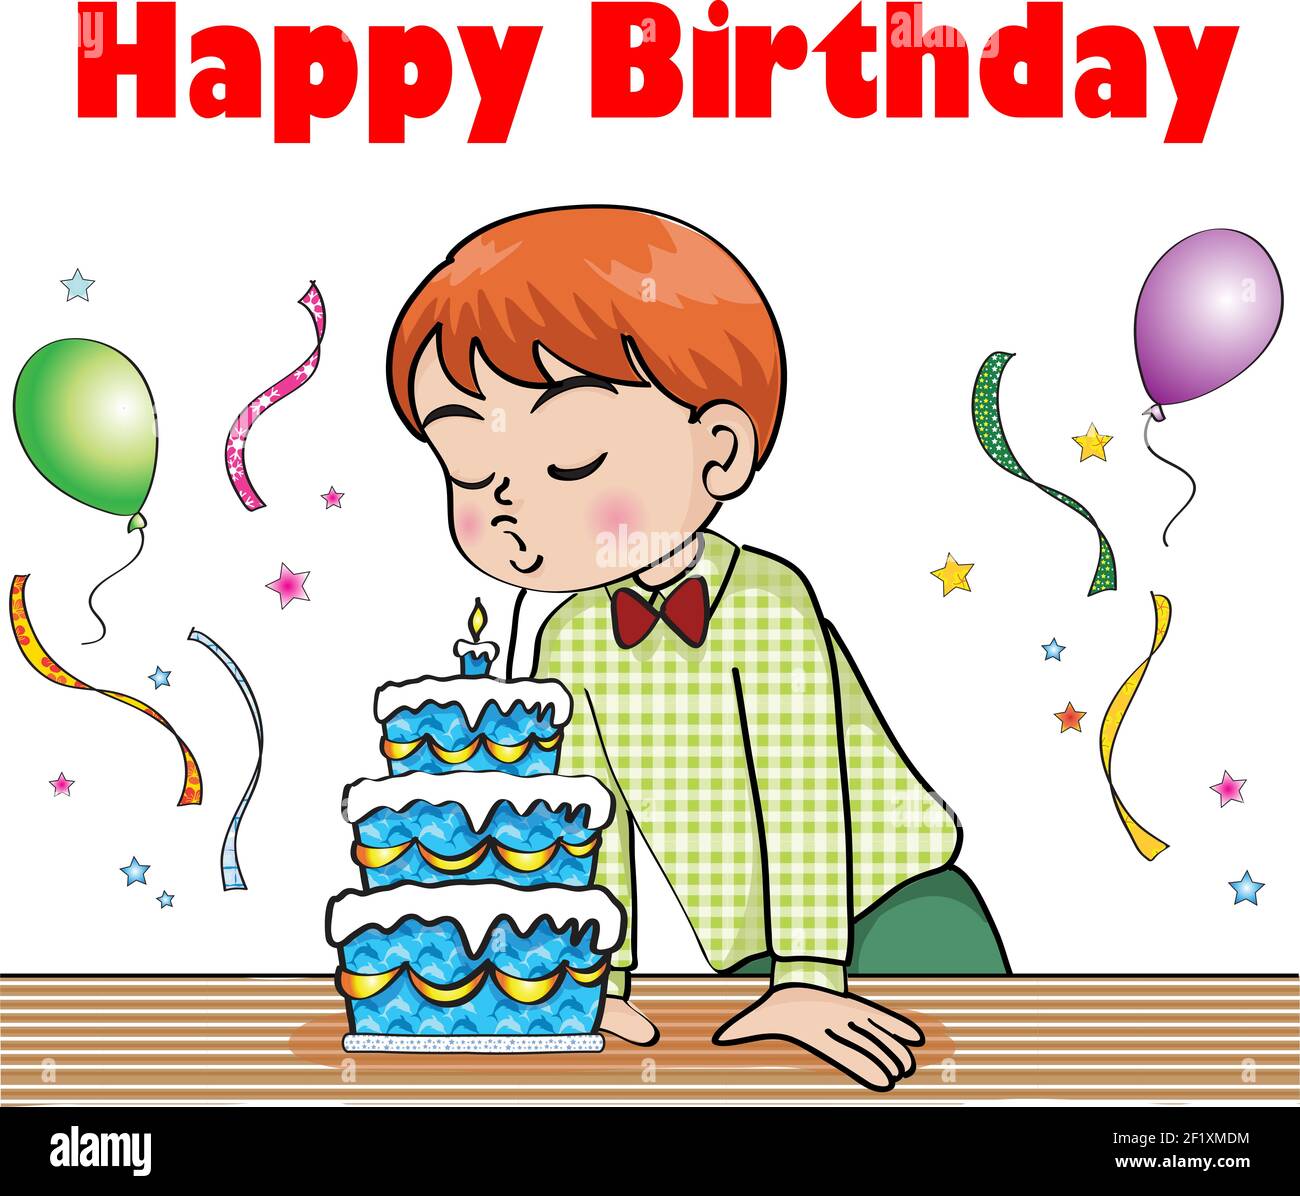 cartoon happy birthday background Stock Photo - Alamy